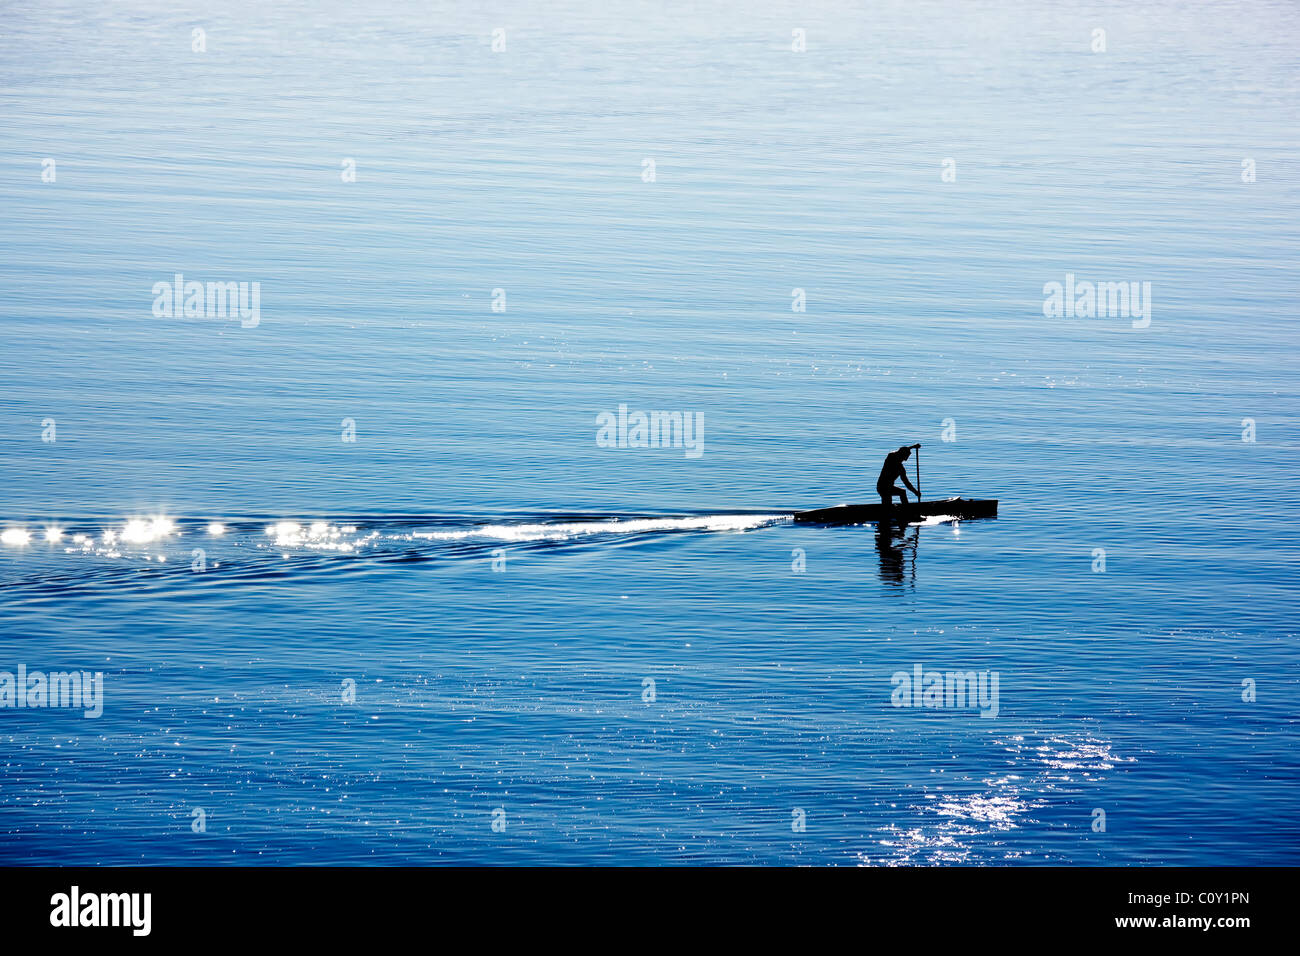 silhouette of canoe rower on lake Stock Photo